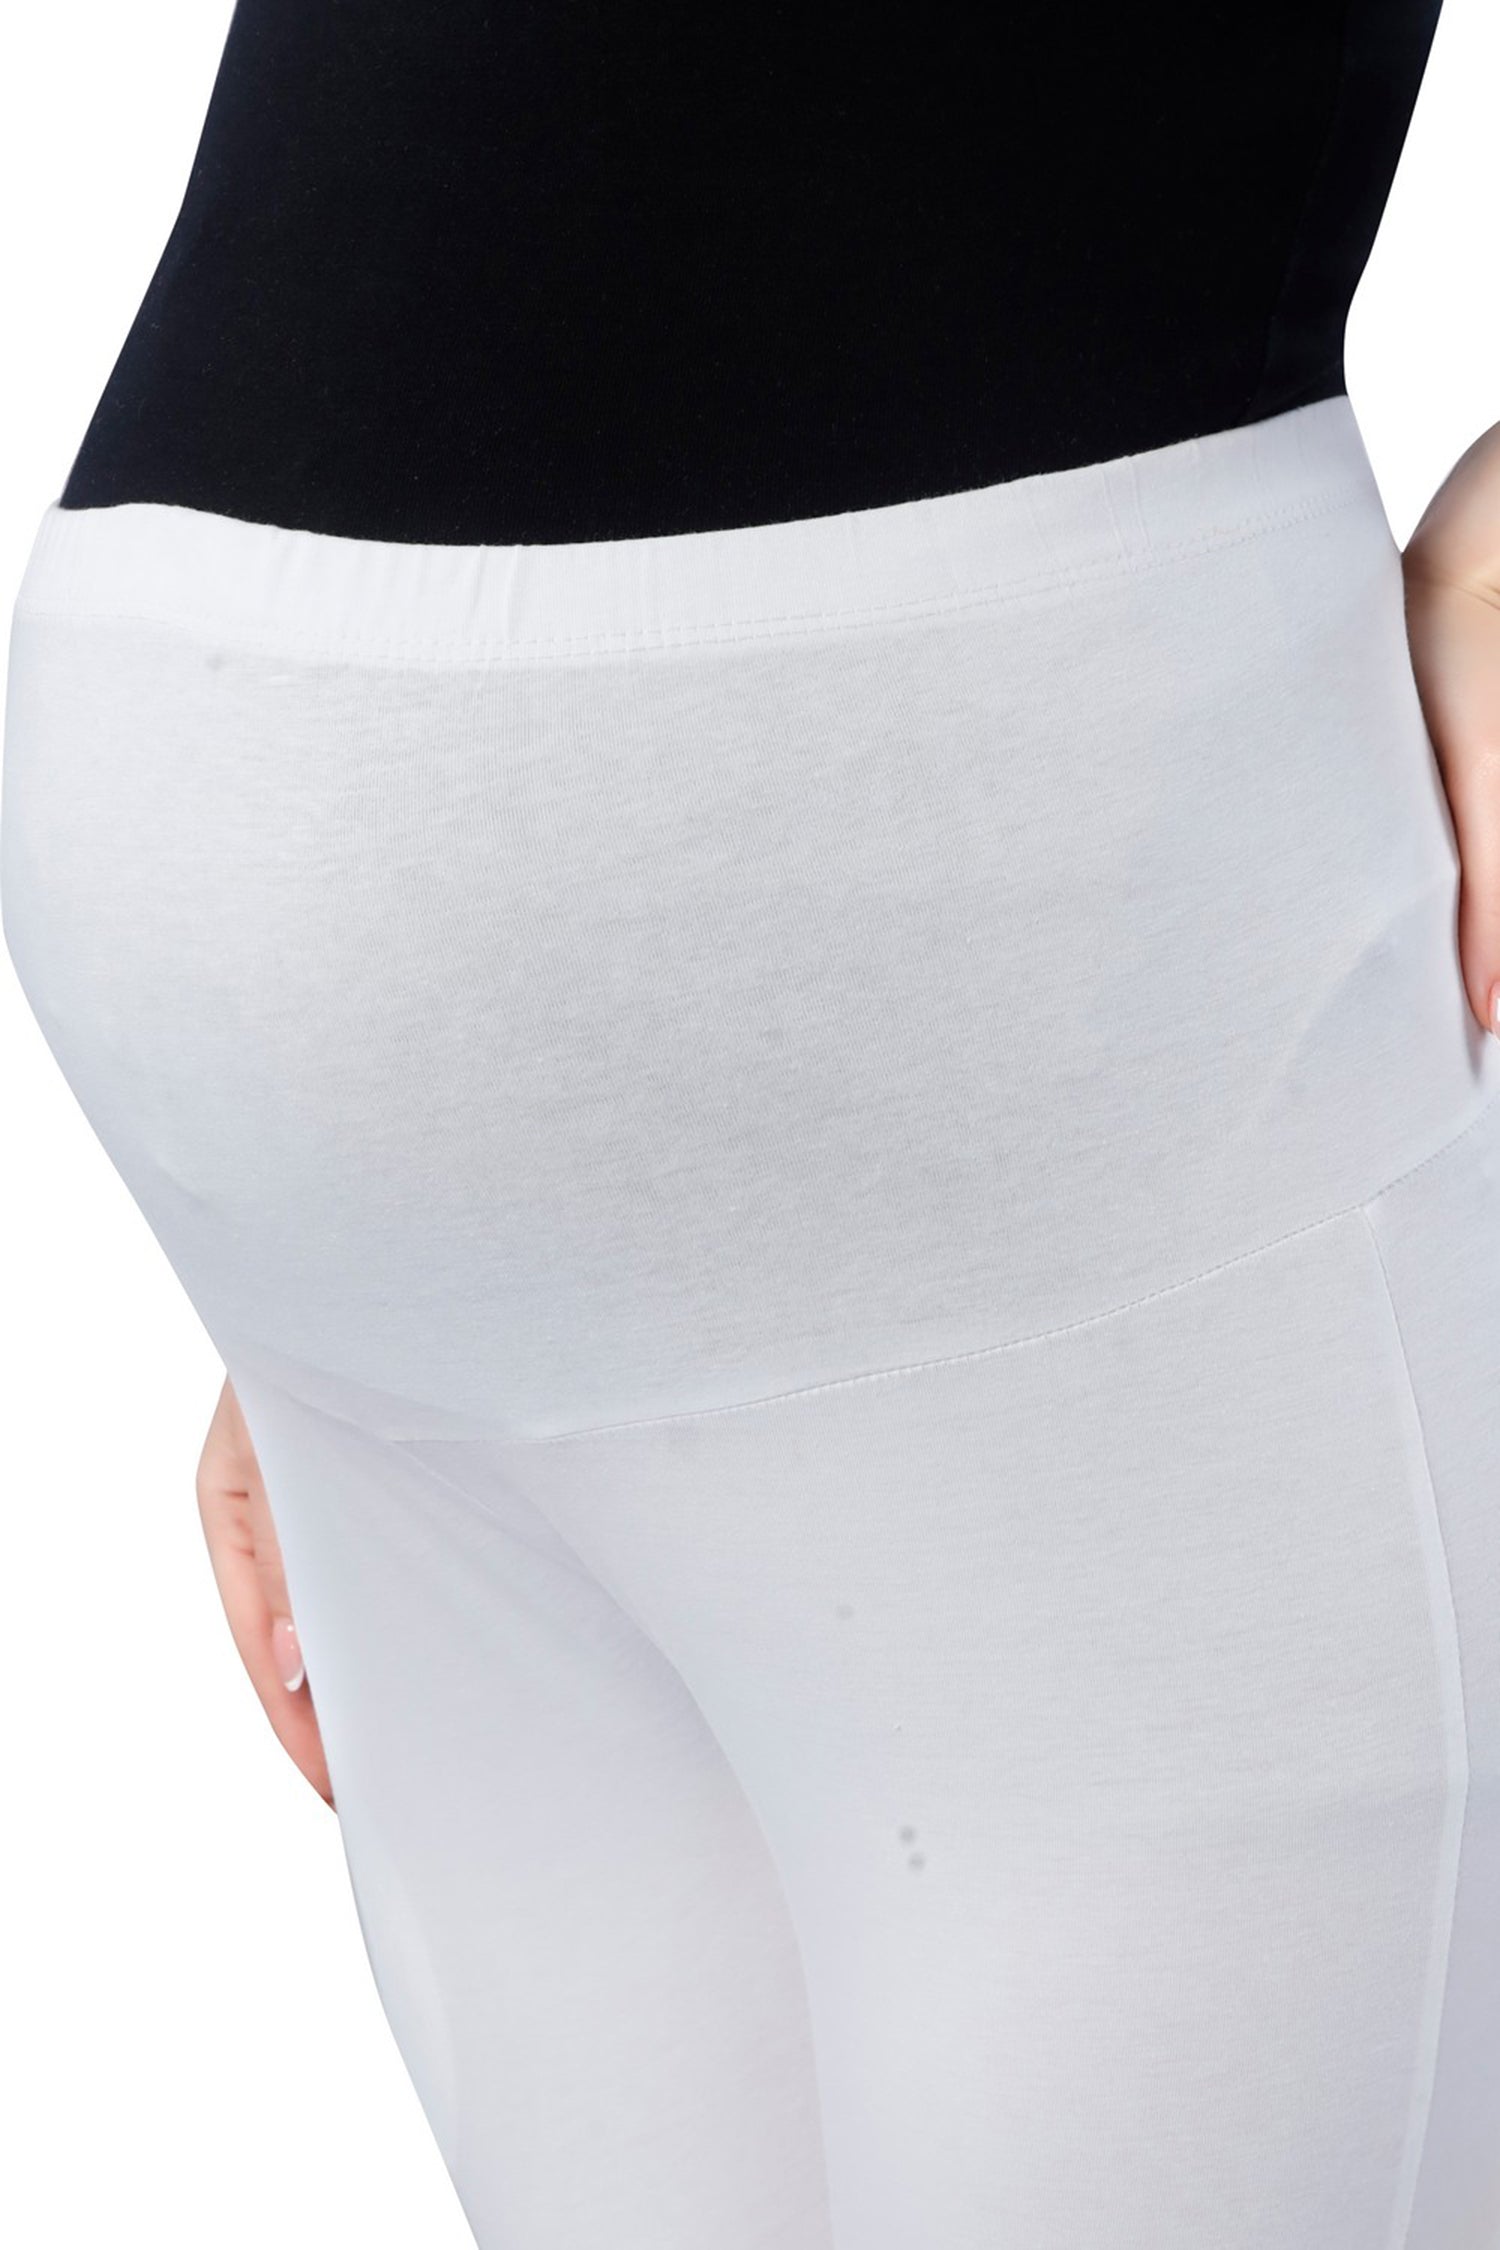 TRASA Women's Cotton 4 Way Stretchable Slim Fit Churidar Leggings - White